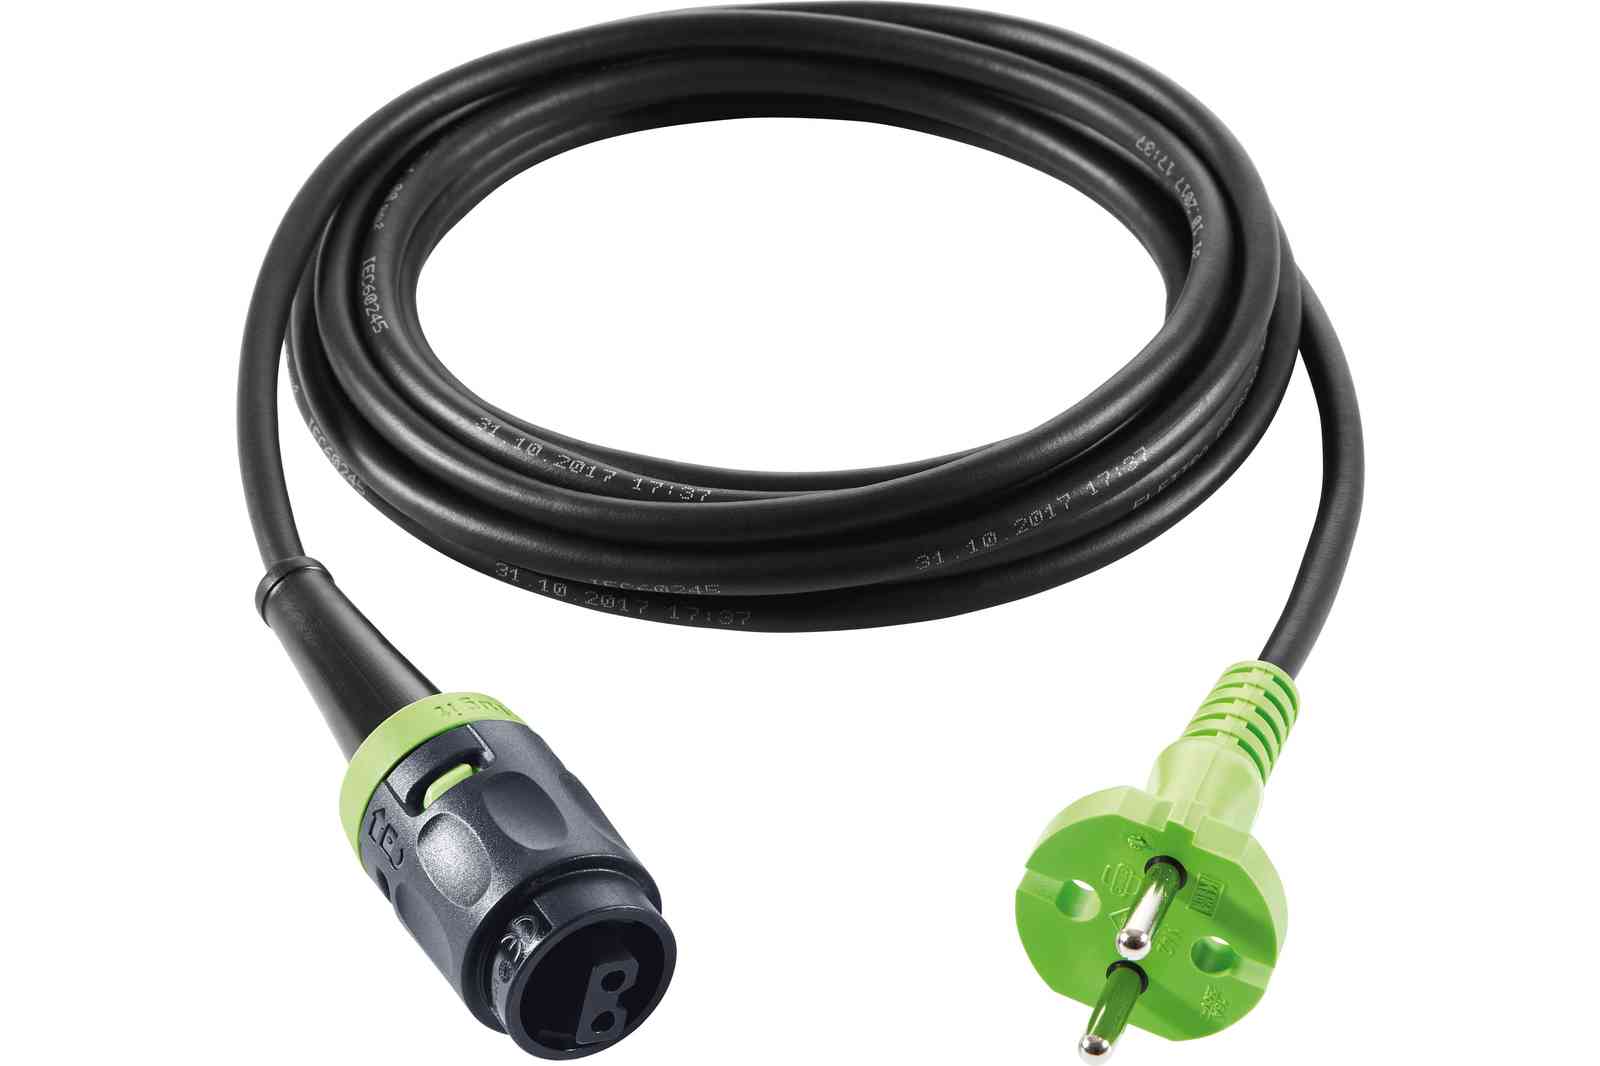 Festool 4m Plug-It Cable H05 RN-F-4 x 3 203914 Power Tool Services